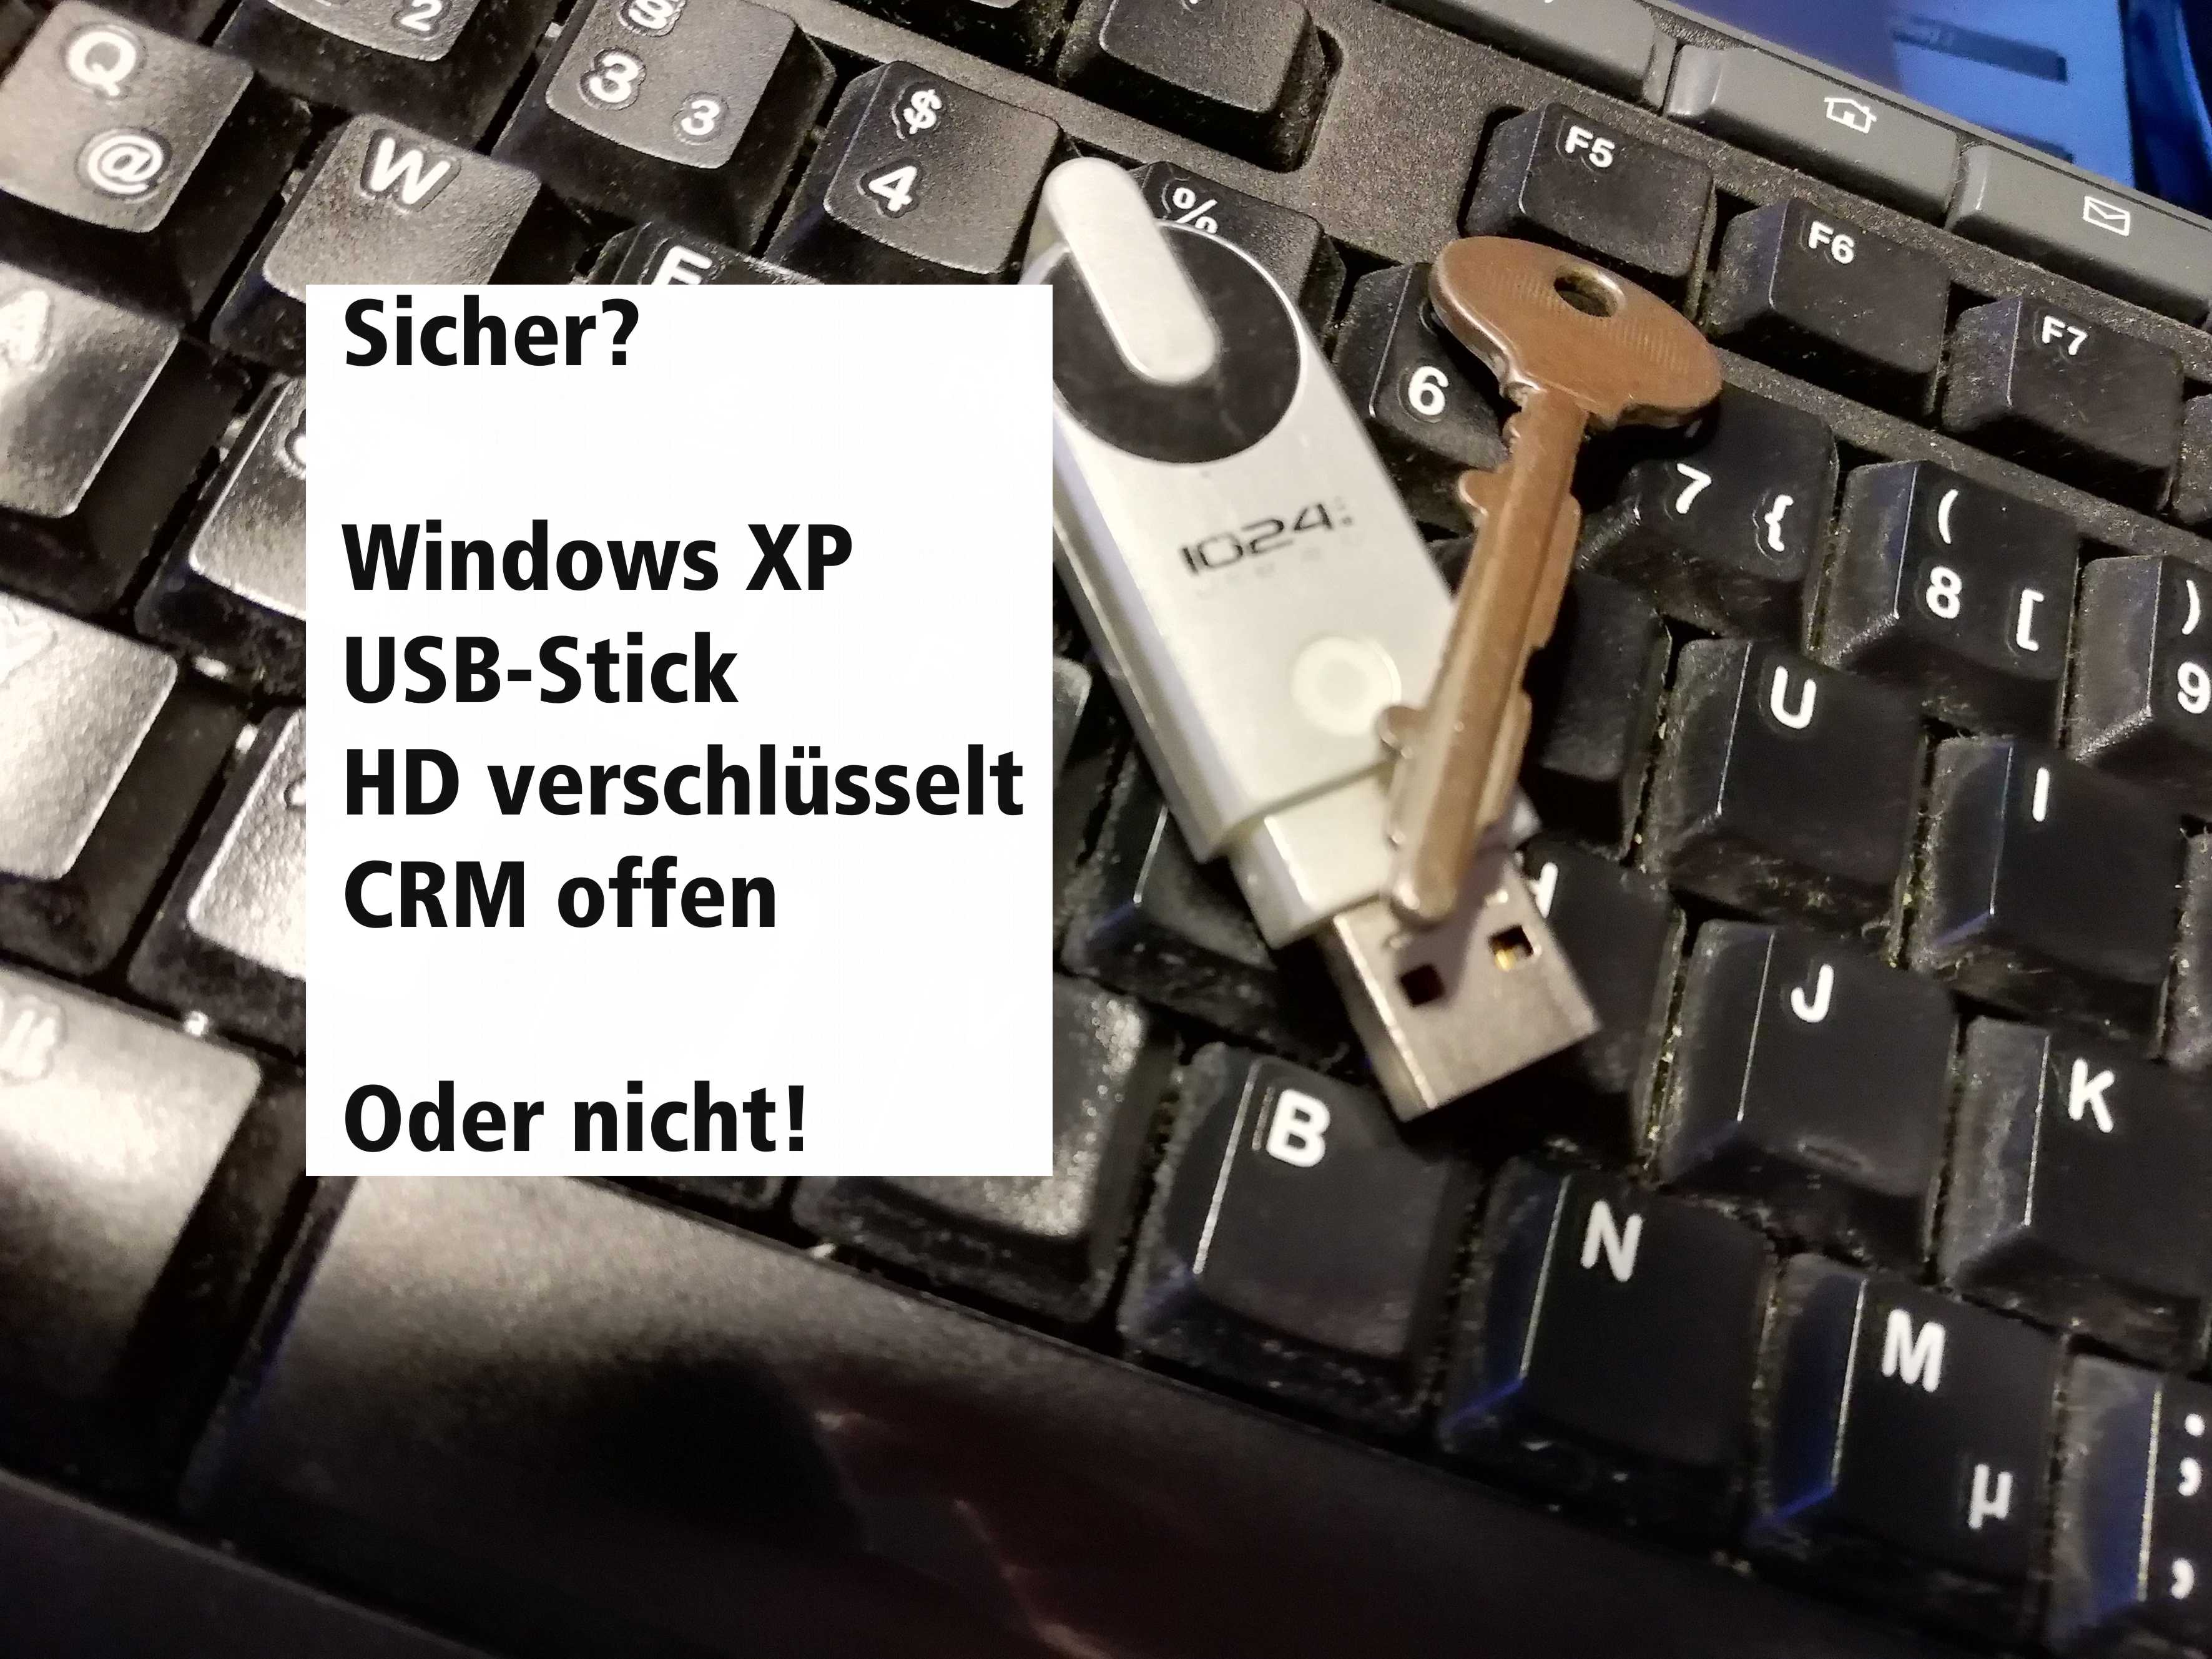 Sicher? Windows XP, USB-Stick, HD verschlüsselt, CRM offen - Oder nicht! - Michael Tönsing, MT MARKETEER